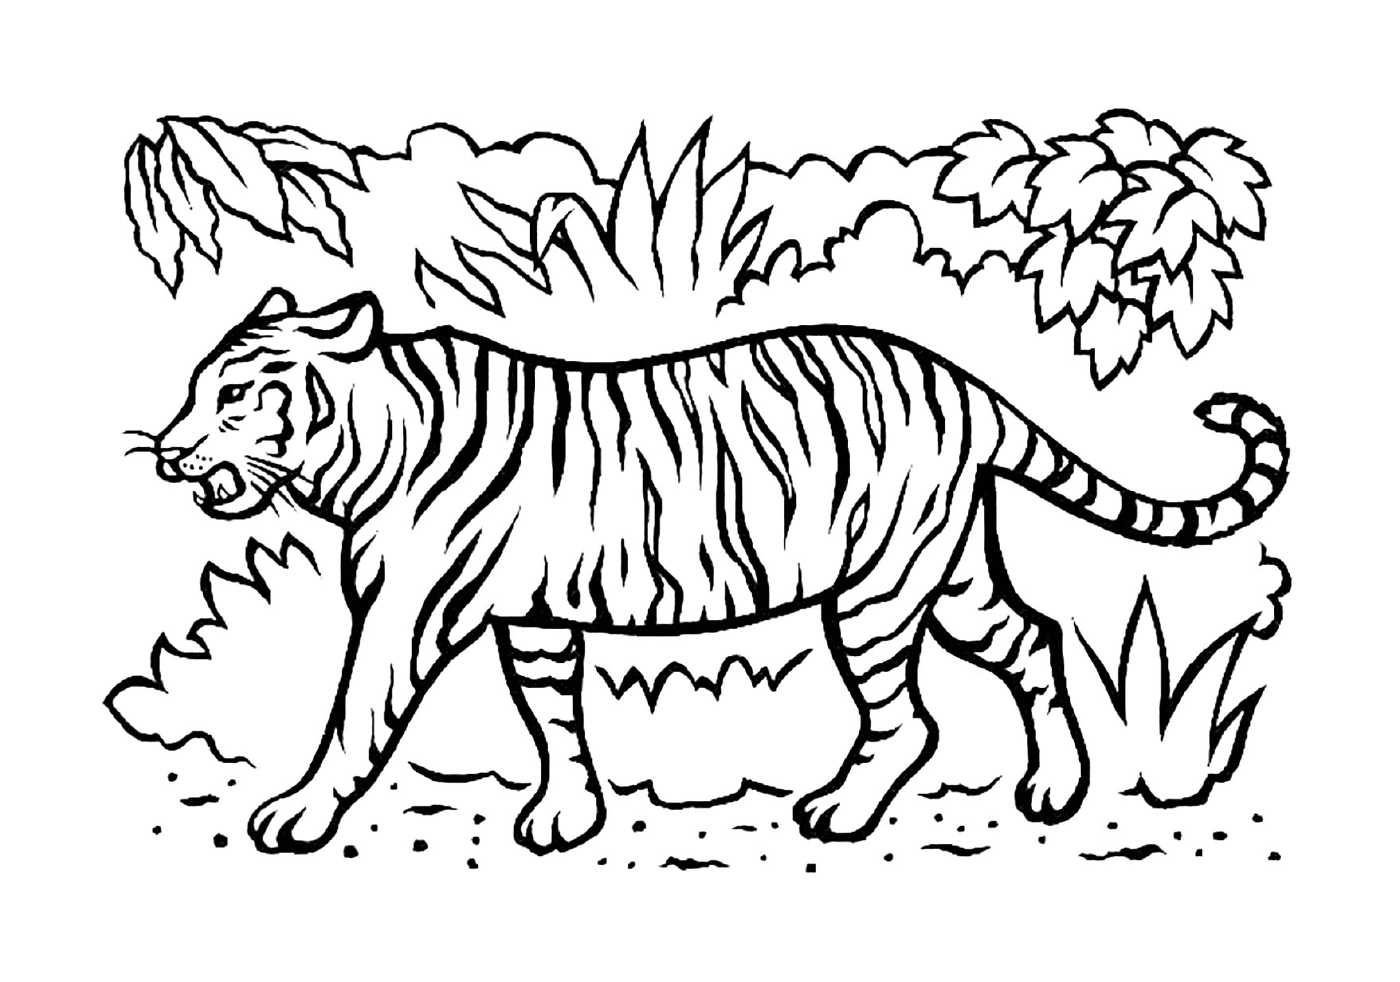 magnifique tigre avec dents dans la savane